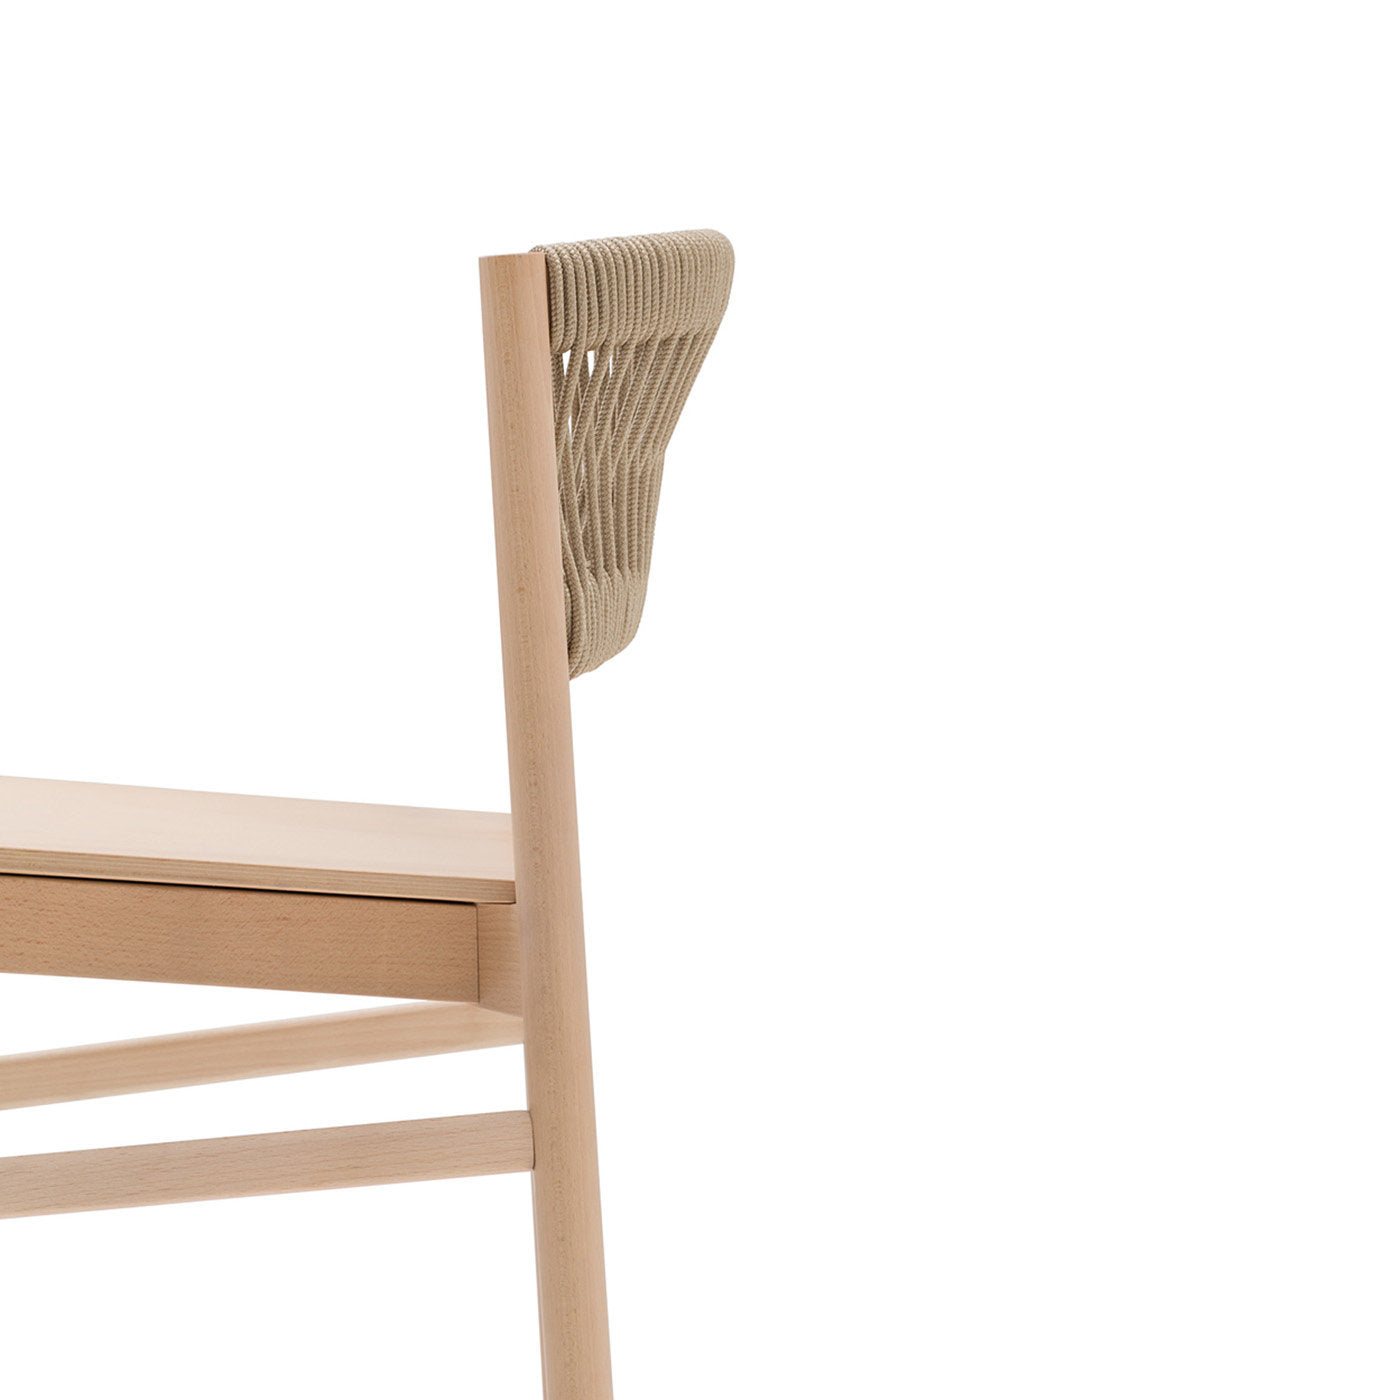 Load Chair by Emilio Nanni - Alternative view 1